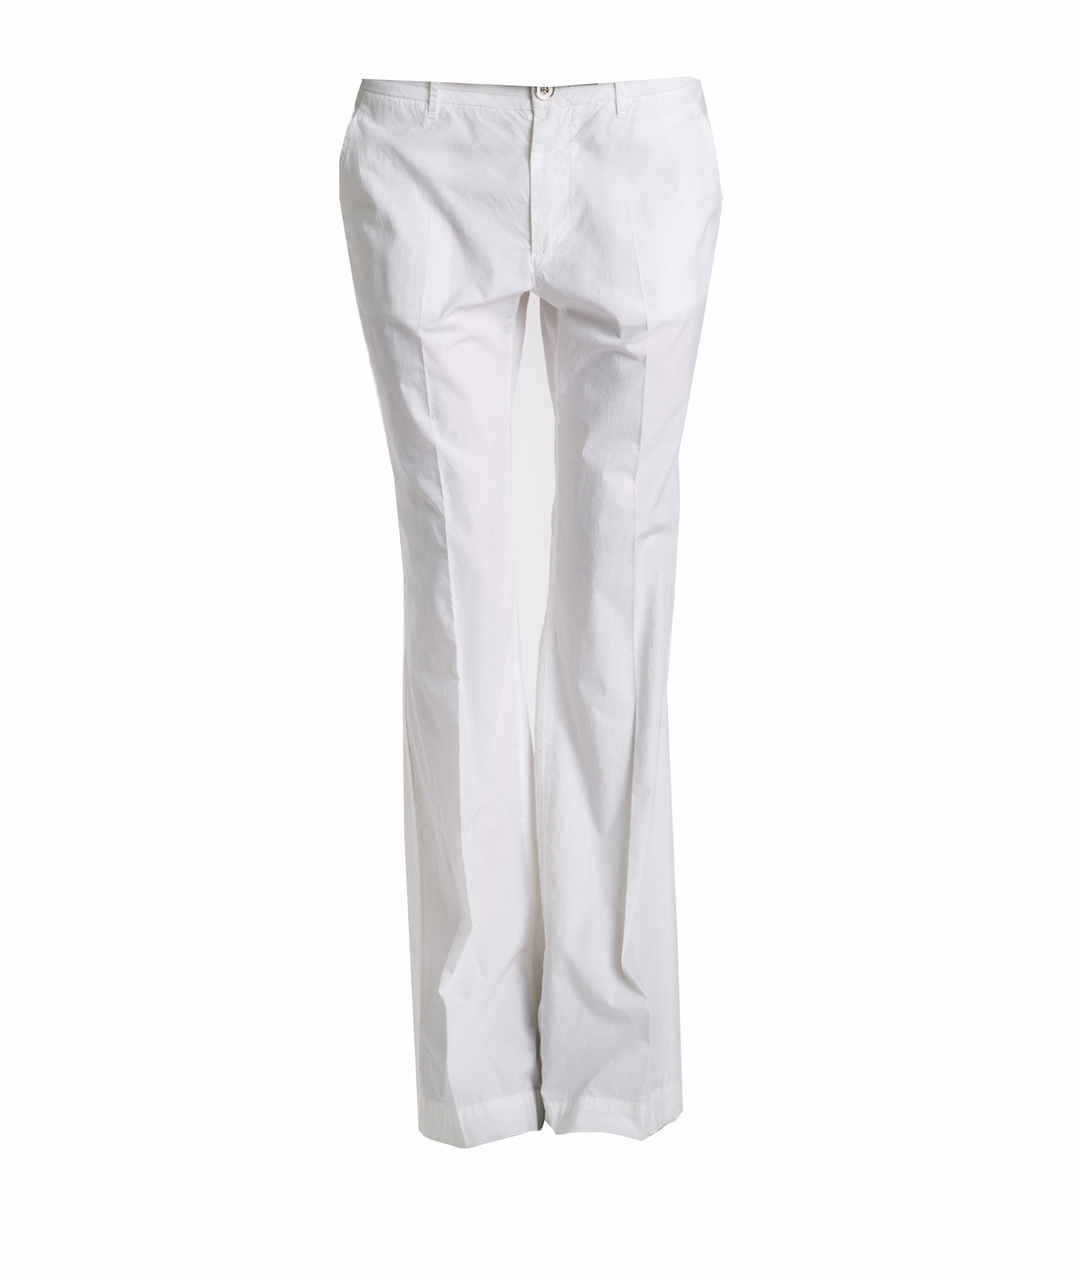 LES COPAINS Белые хлопковые брюки широкие, фото 1